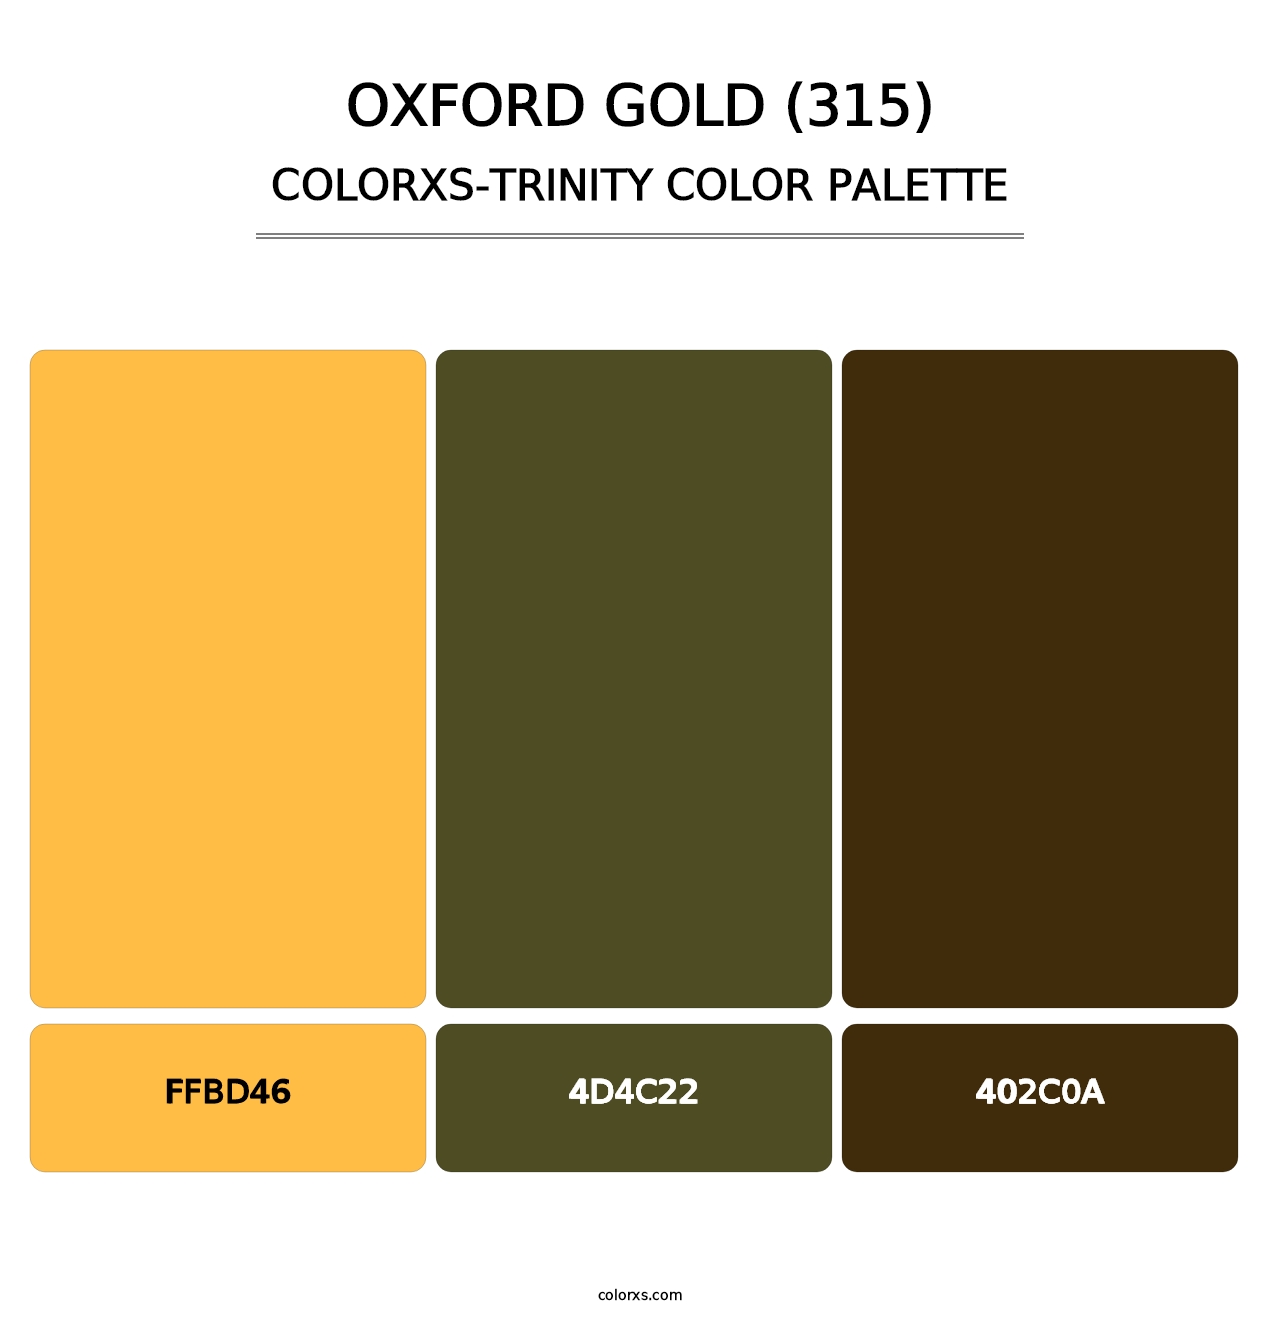 Oxford Gold (315) - Colorxs Trinity Palette